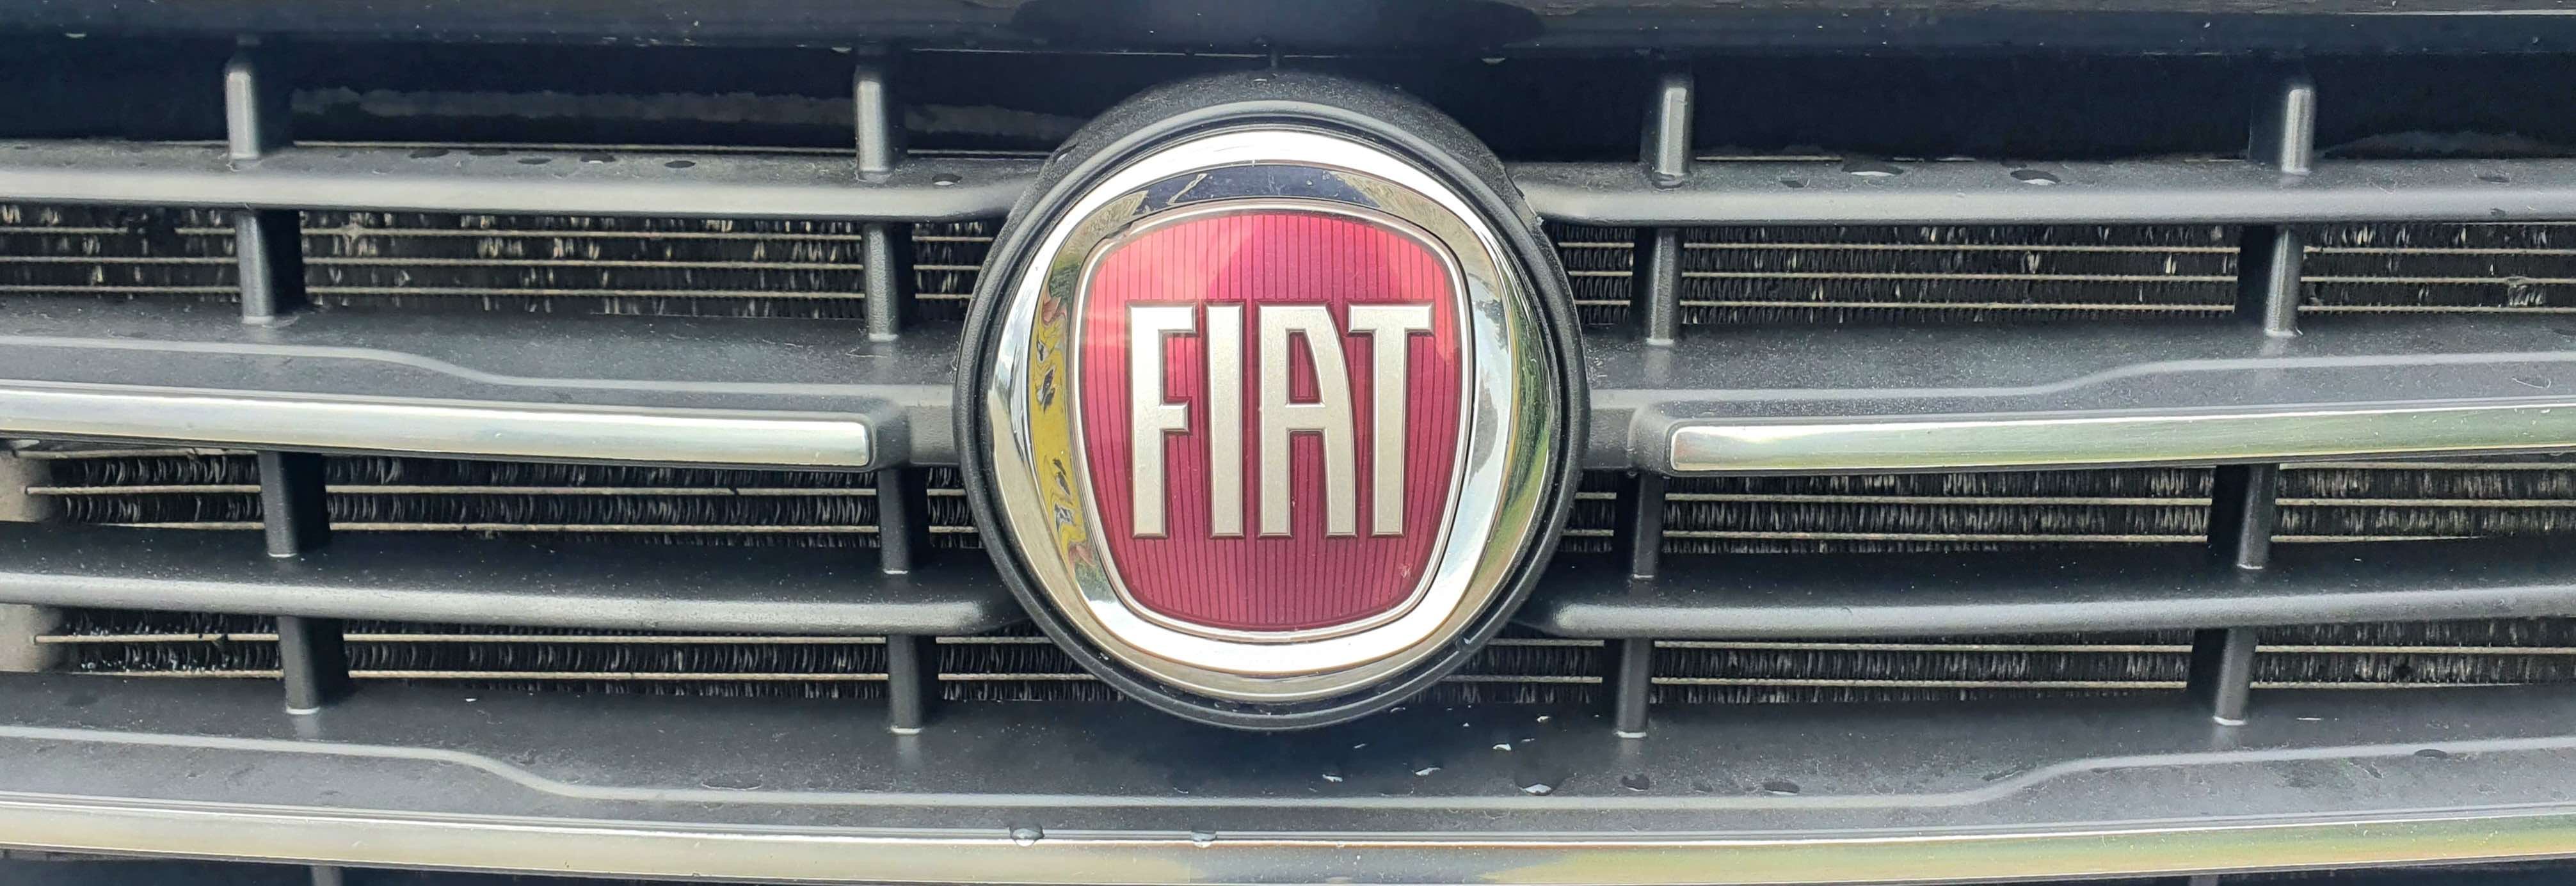 Fiat badge on a Wilderness Carado T449 2018 motorhome